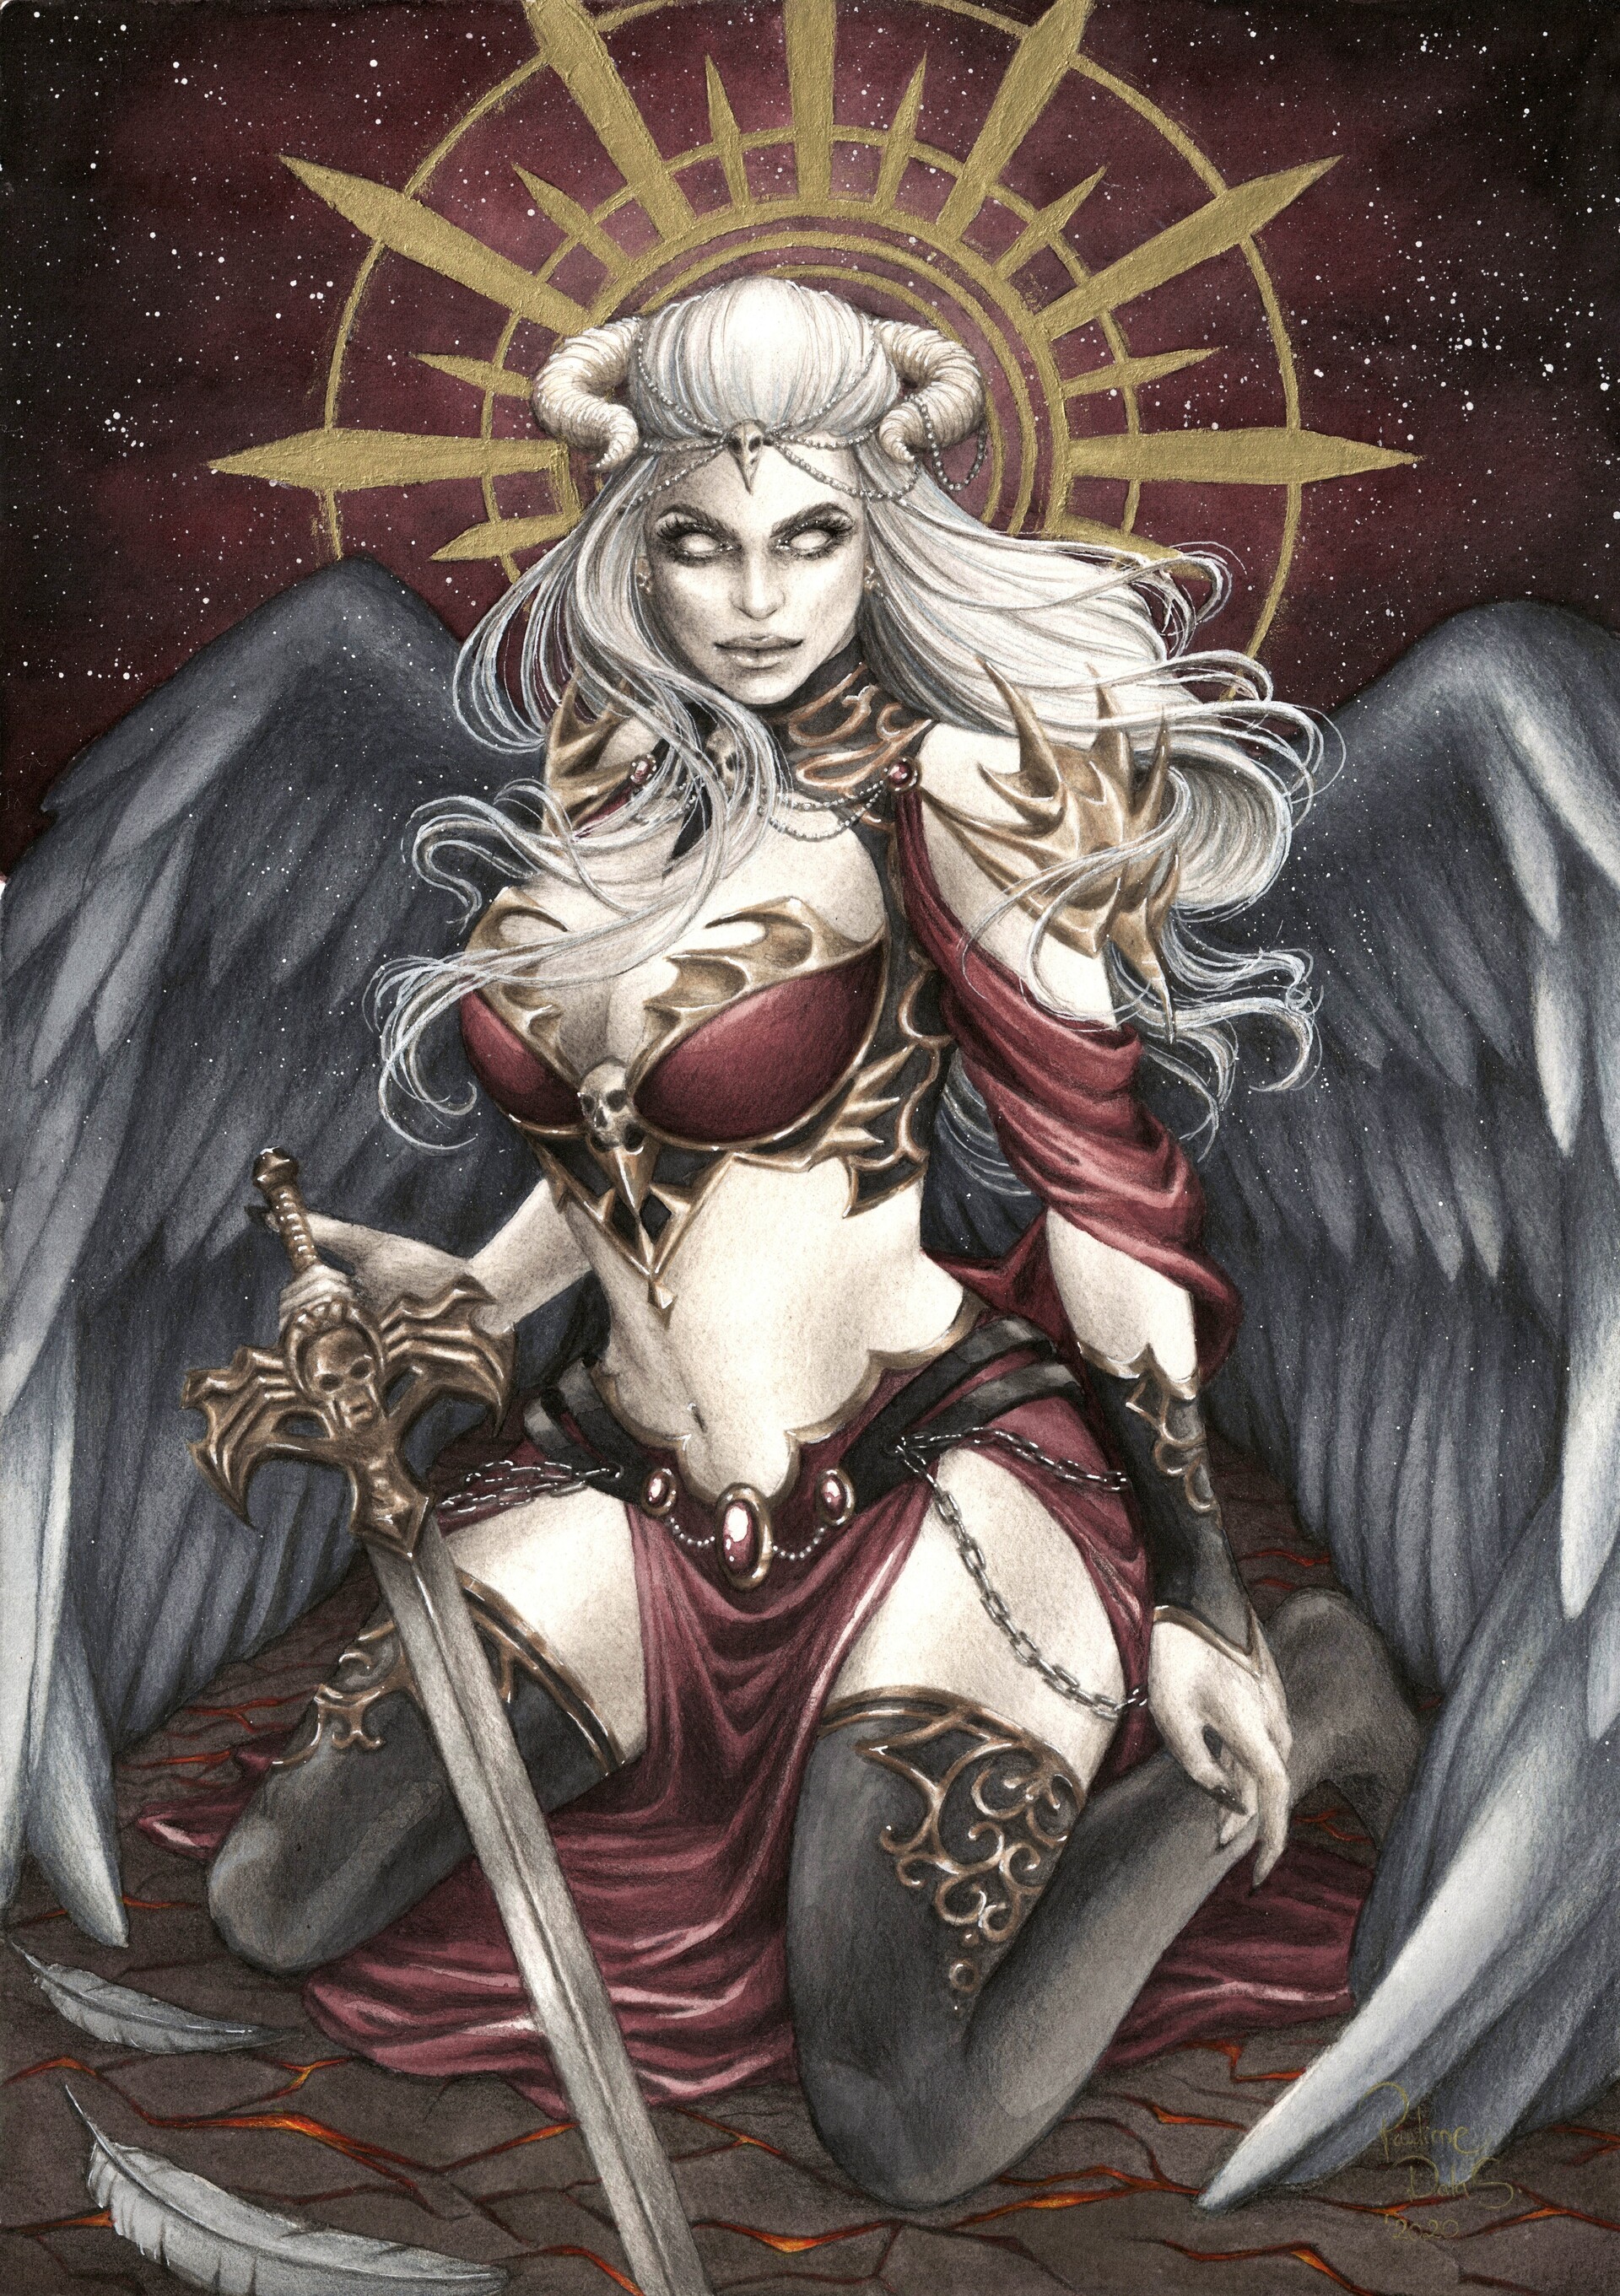 LADY DEATH horror dark demon satan goddess fantasy sexy babe 31 wallpaper   1920x1500  380700  WallpaperUP